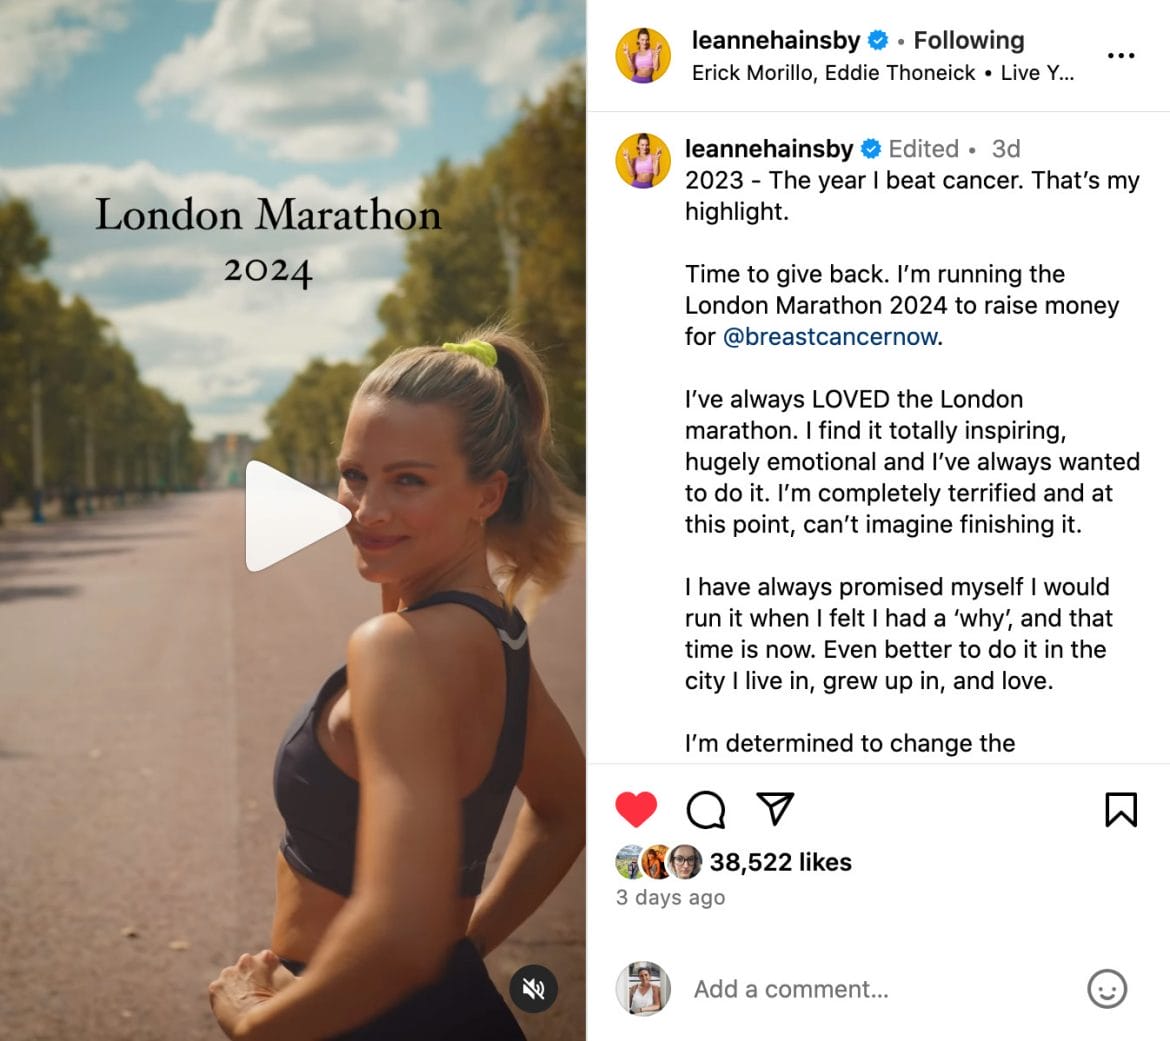 Leanne Hainsby's Instagram post regarding the 2024 London Marathon.